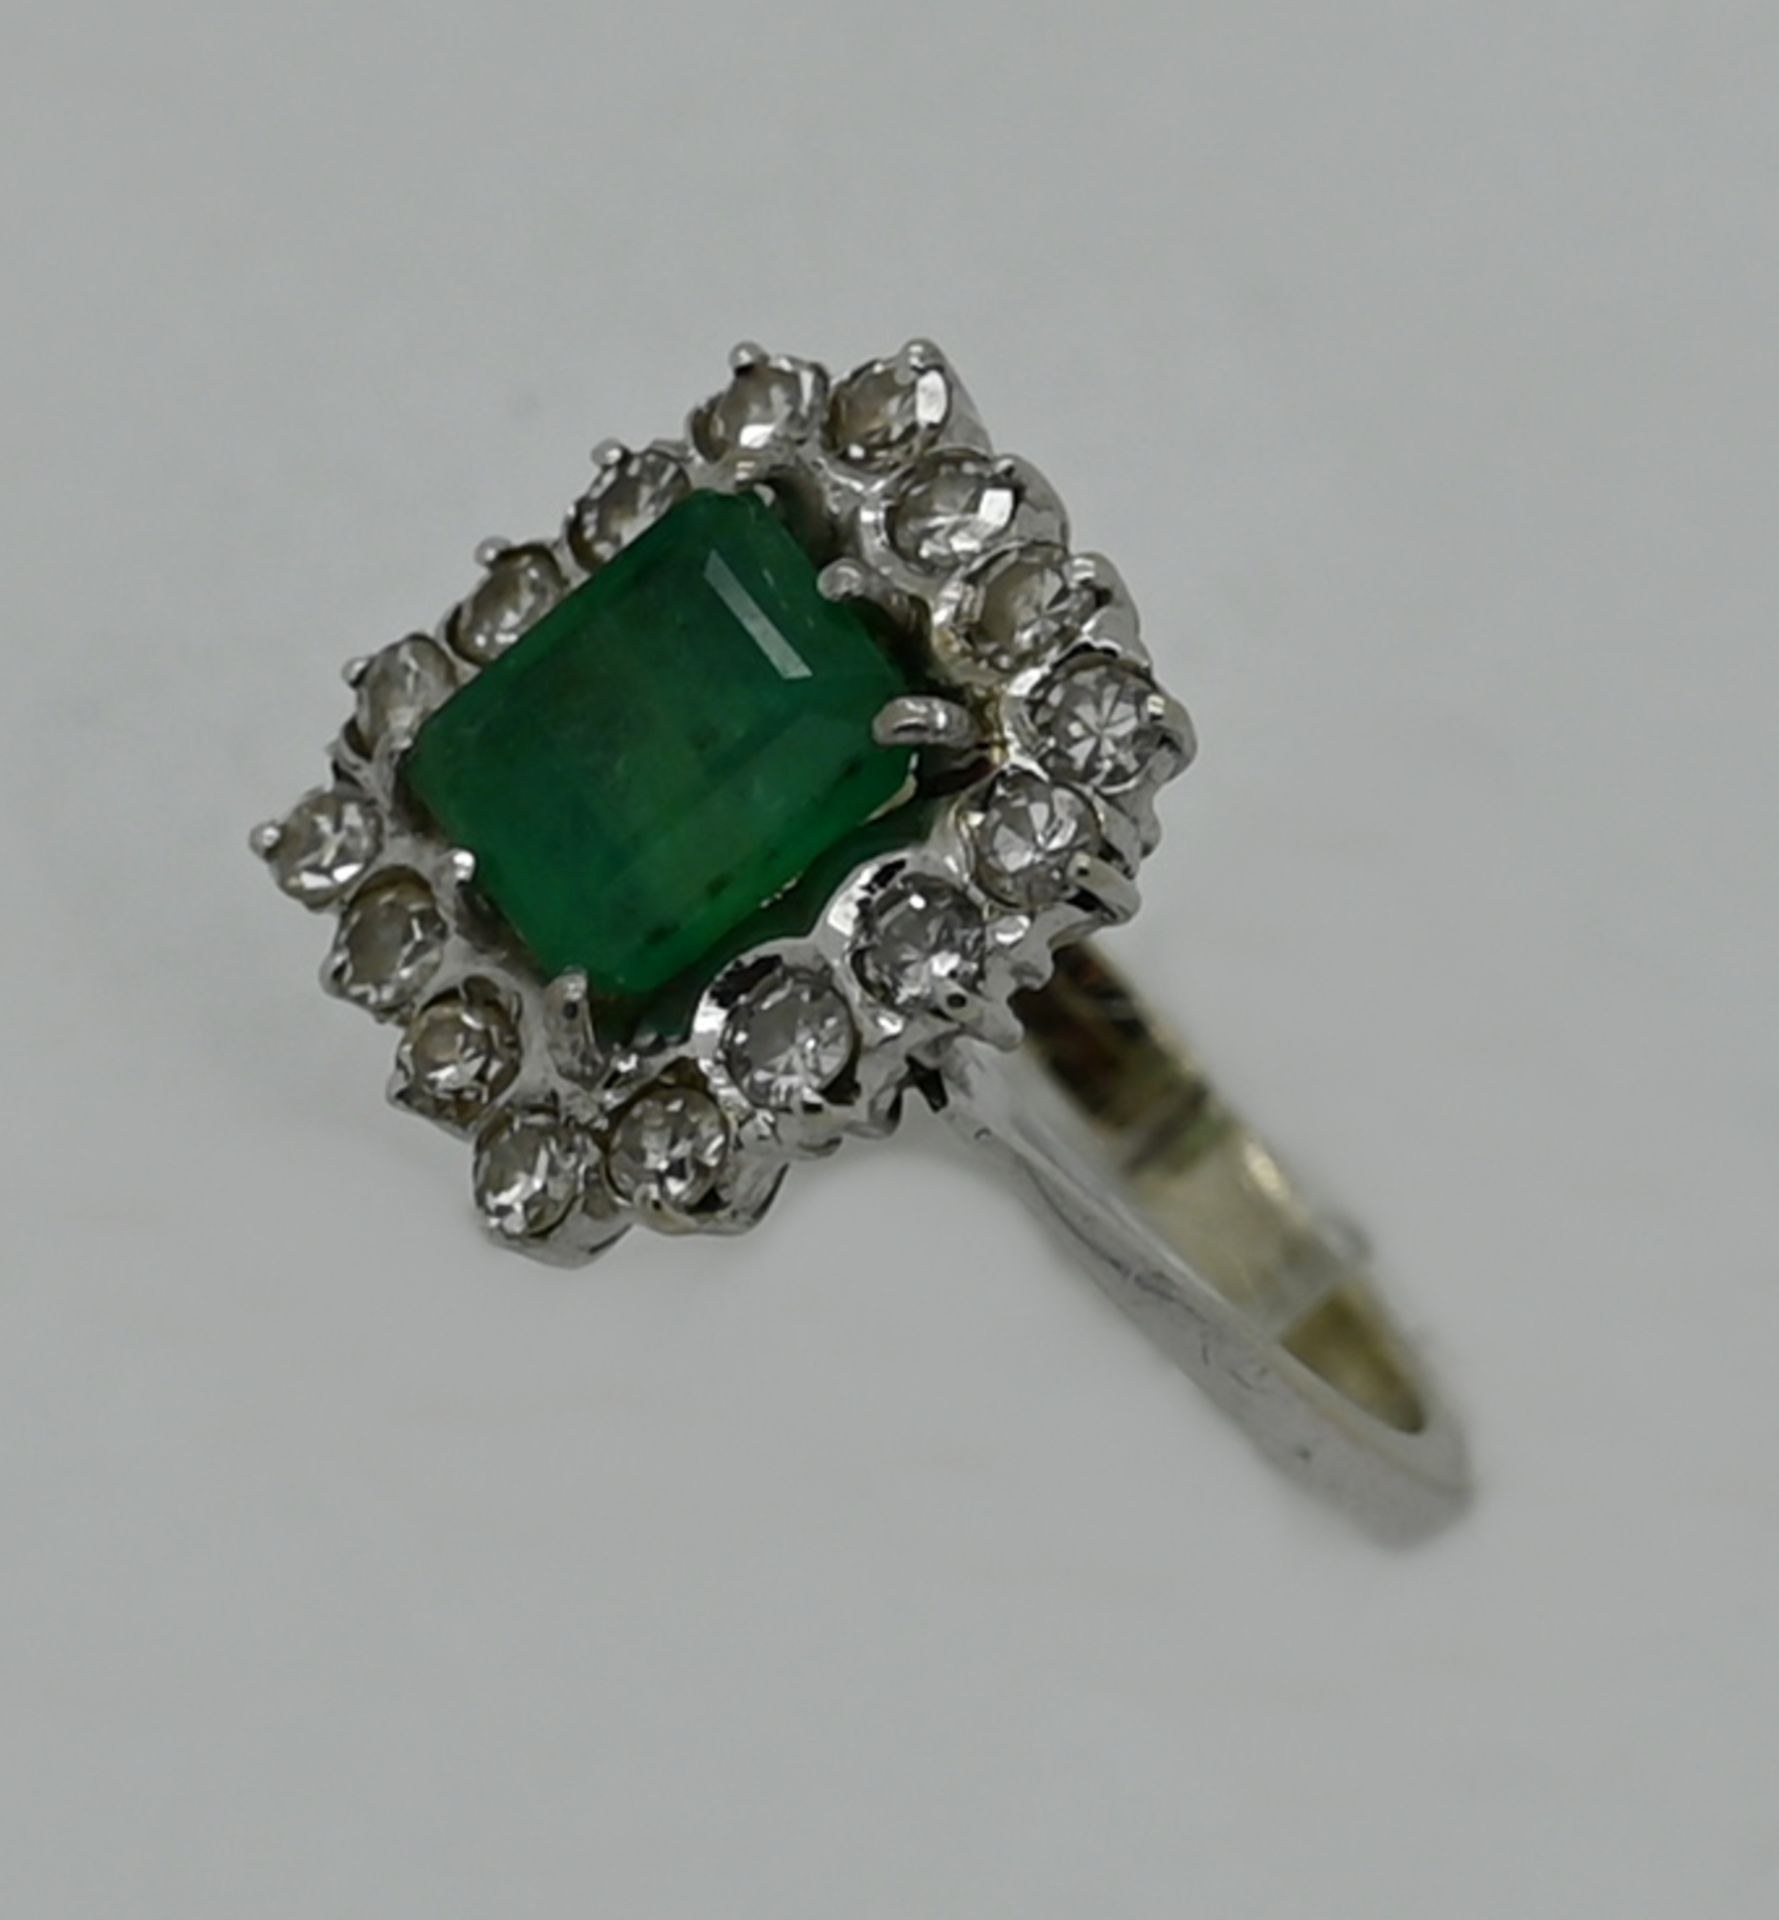 1 Damenring ungestempelt, wohl WG, zentral Smaragd mit Brillantkranz (je ca. 0,05ct.), Ringgröße ca. - Image 2 of 2